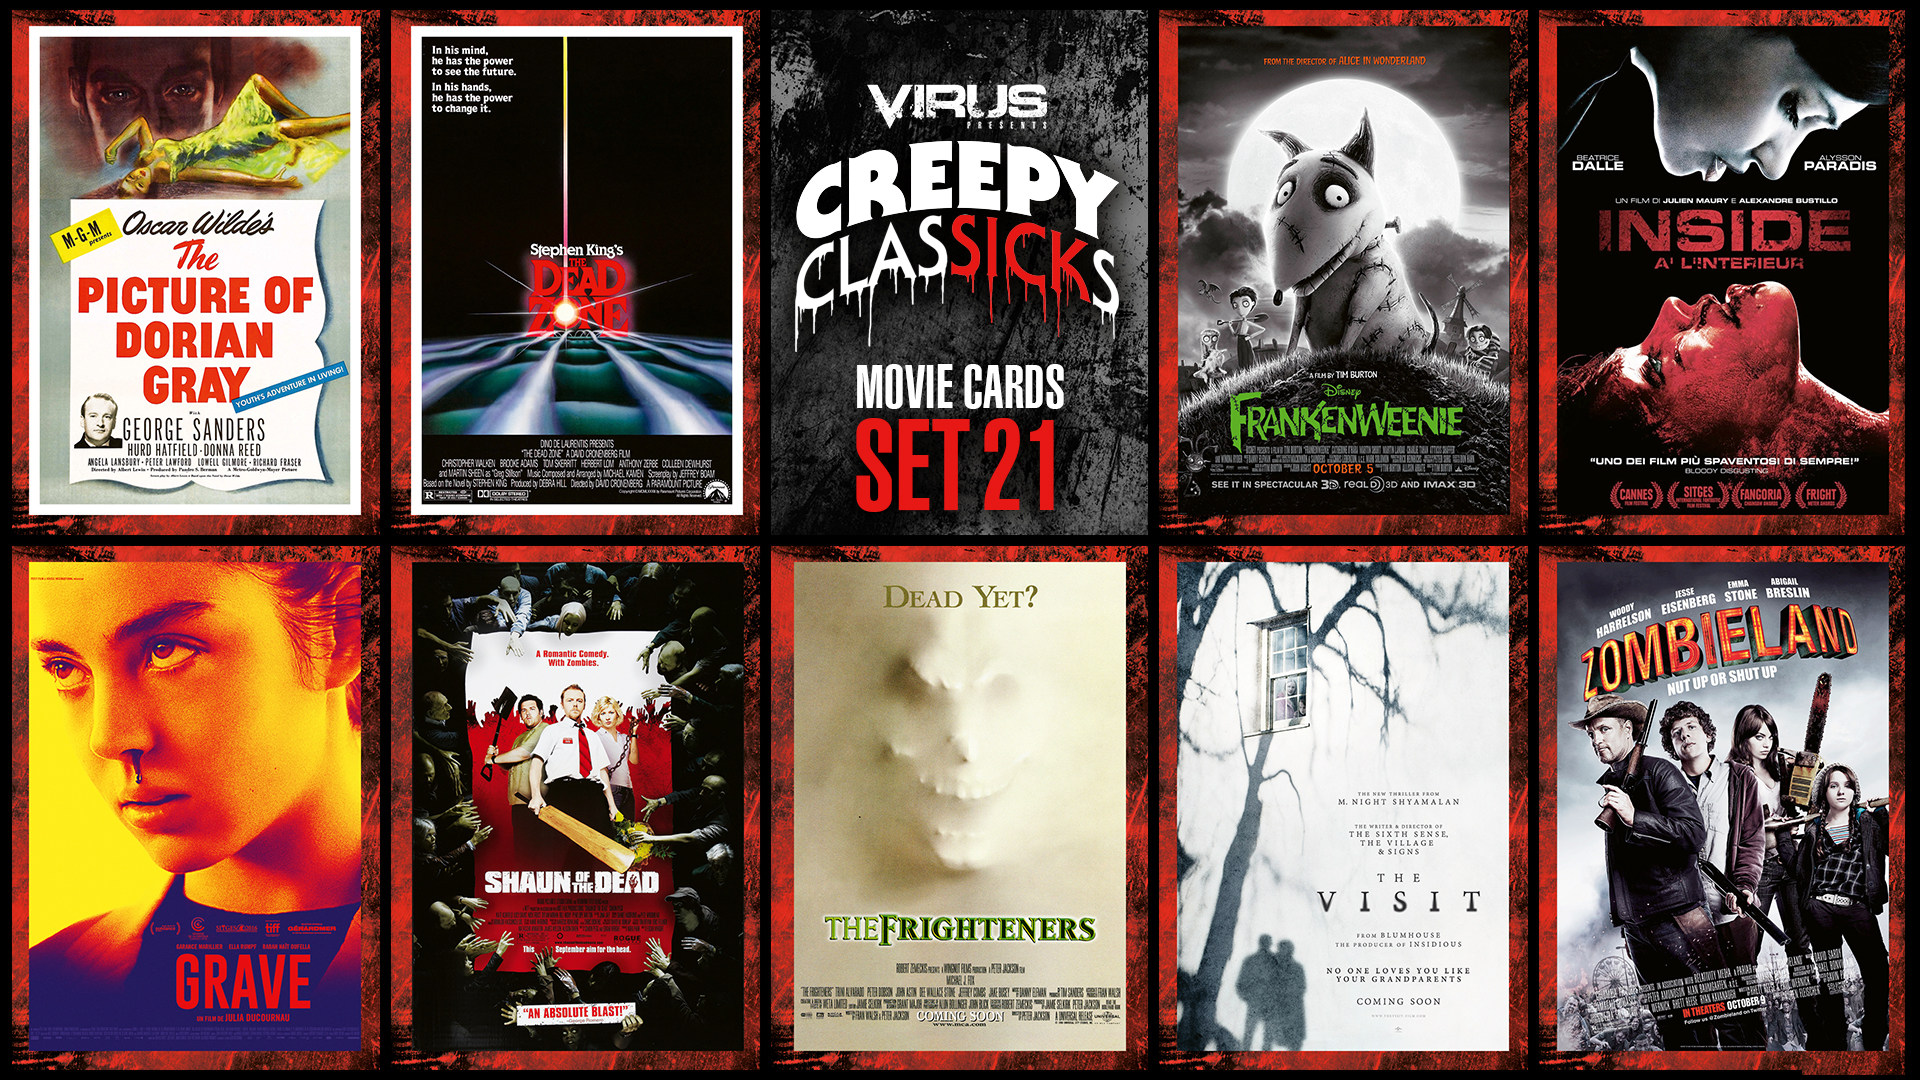 VIRUS Creepy ClasSICKs Movie Cards Set #21